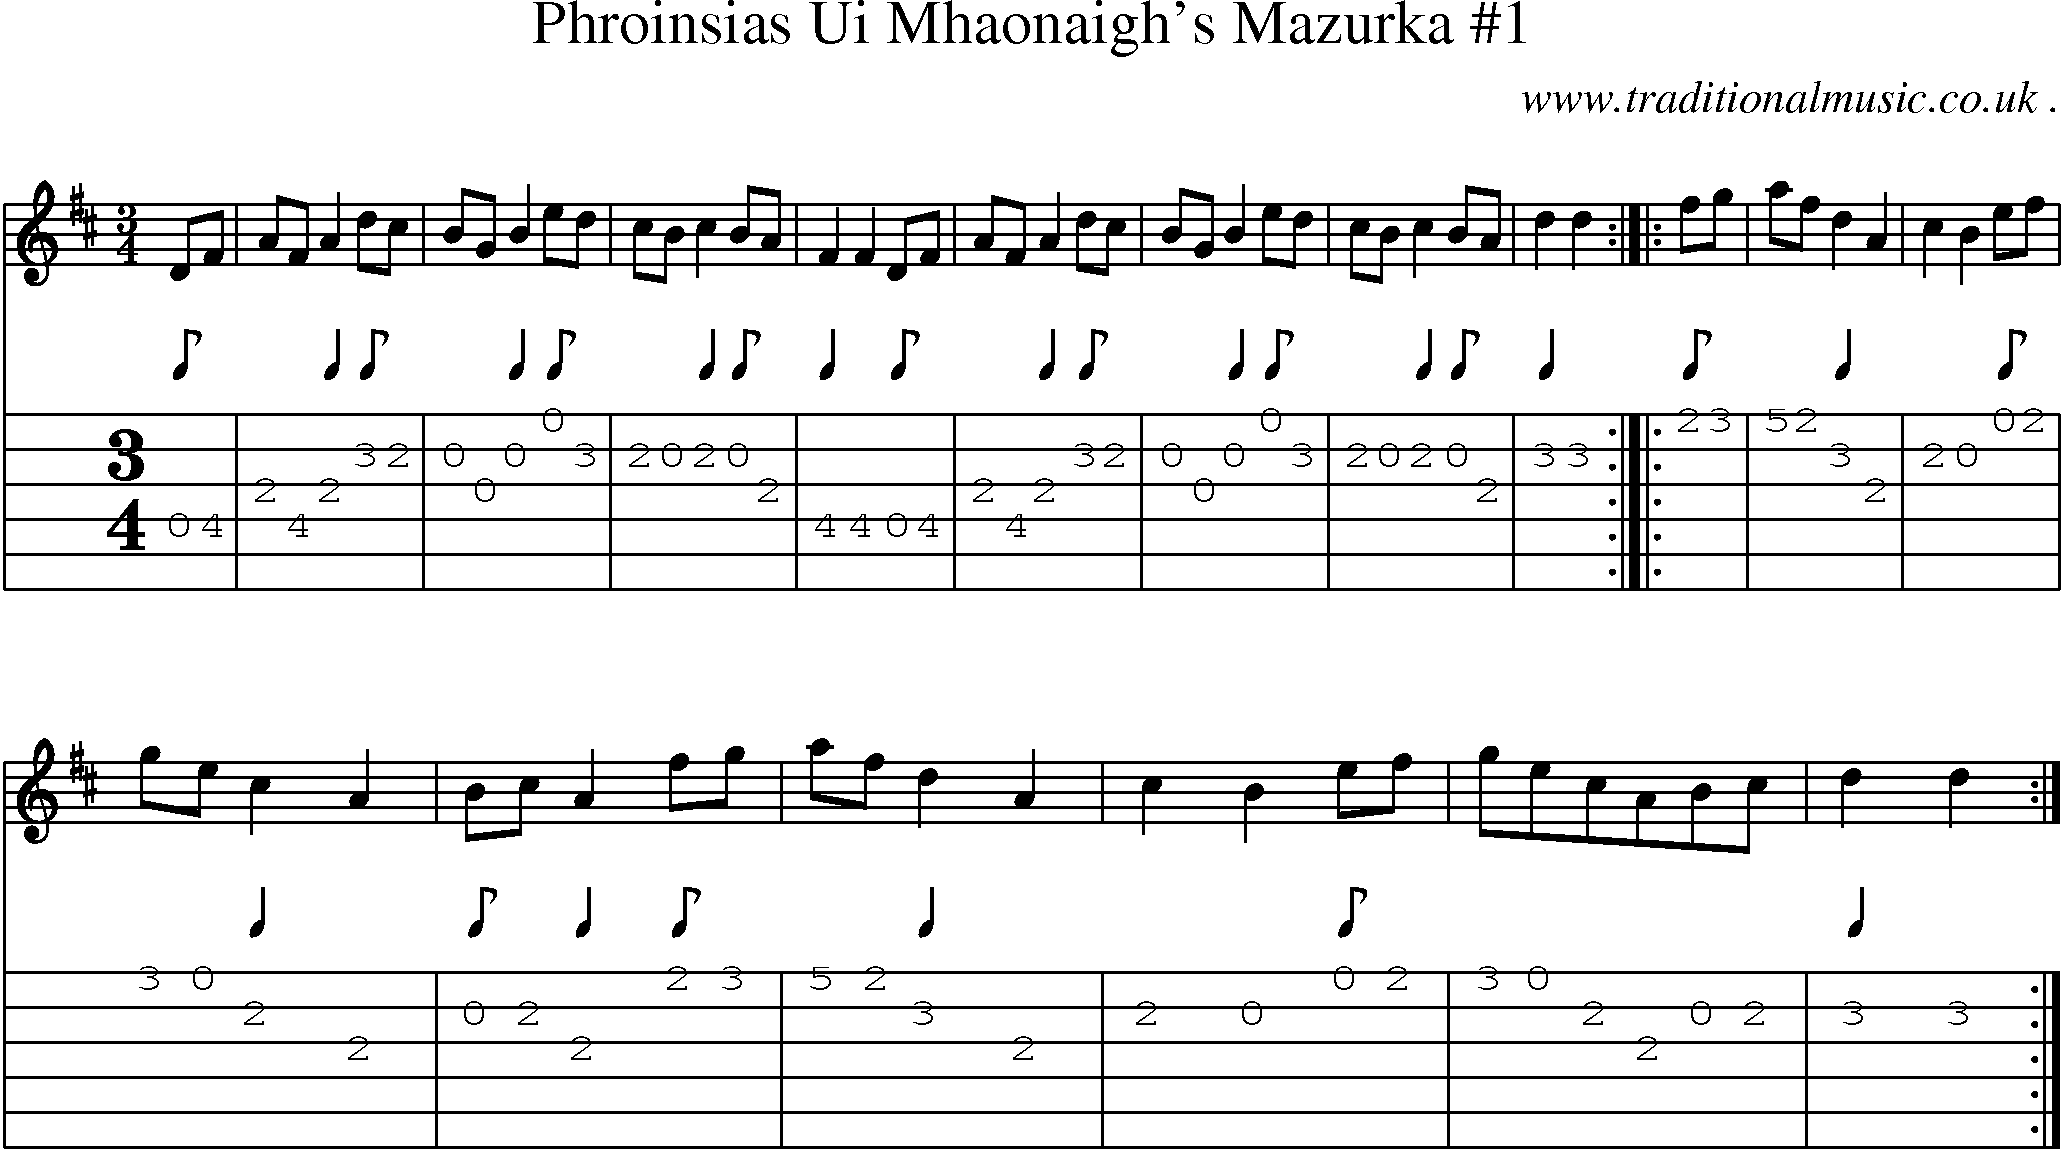 Sheet-Music and Guitar Tabs for Phroinsias Ui Mhaonaighs Mazurka 1